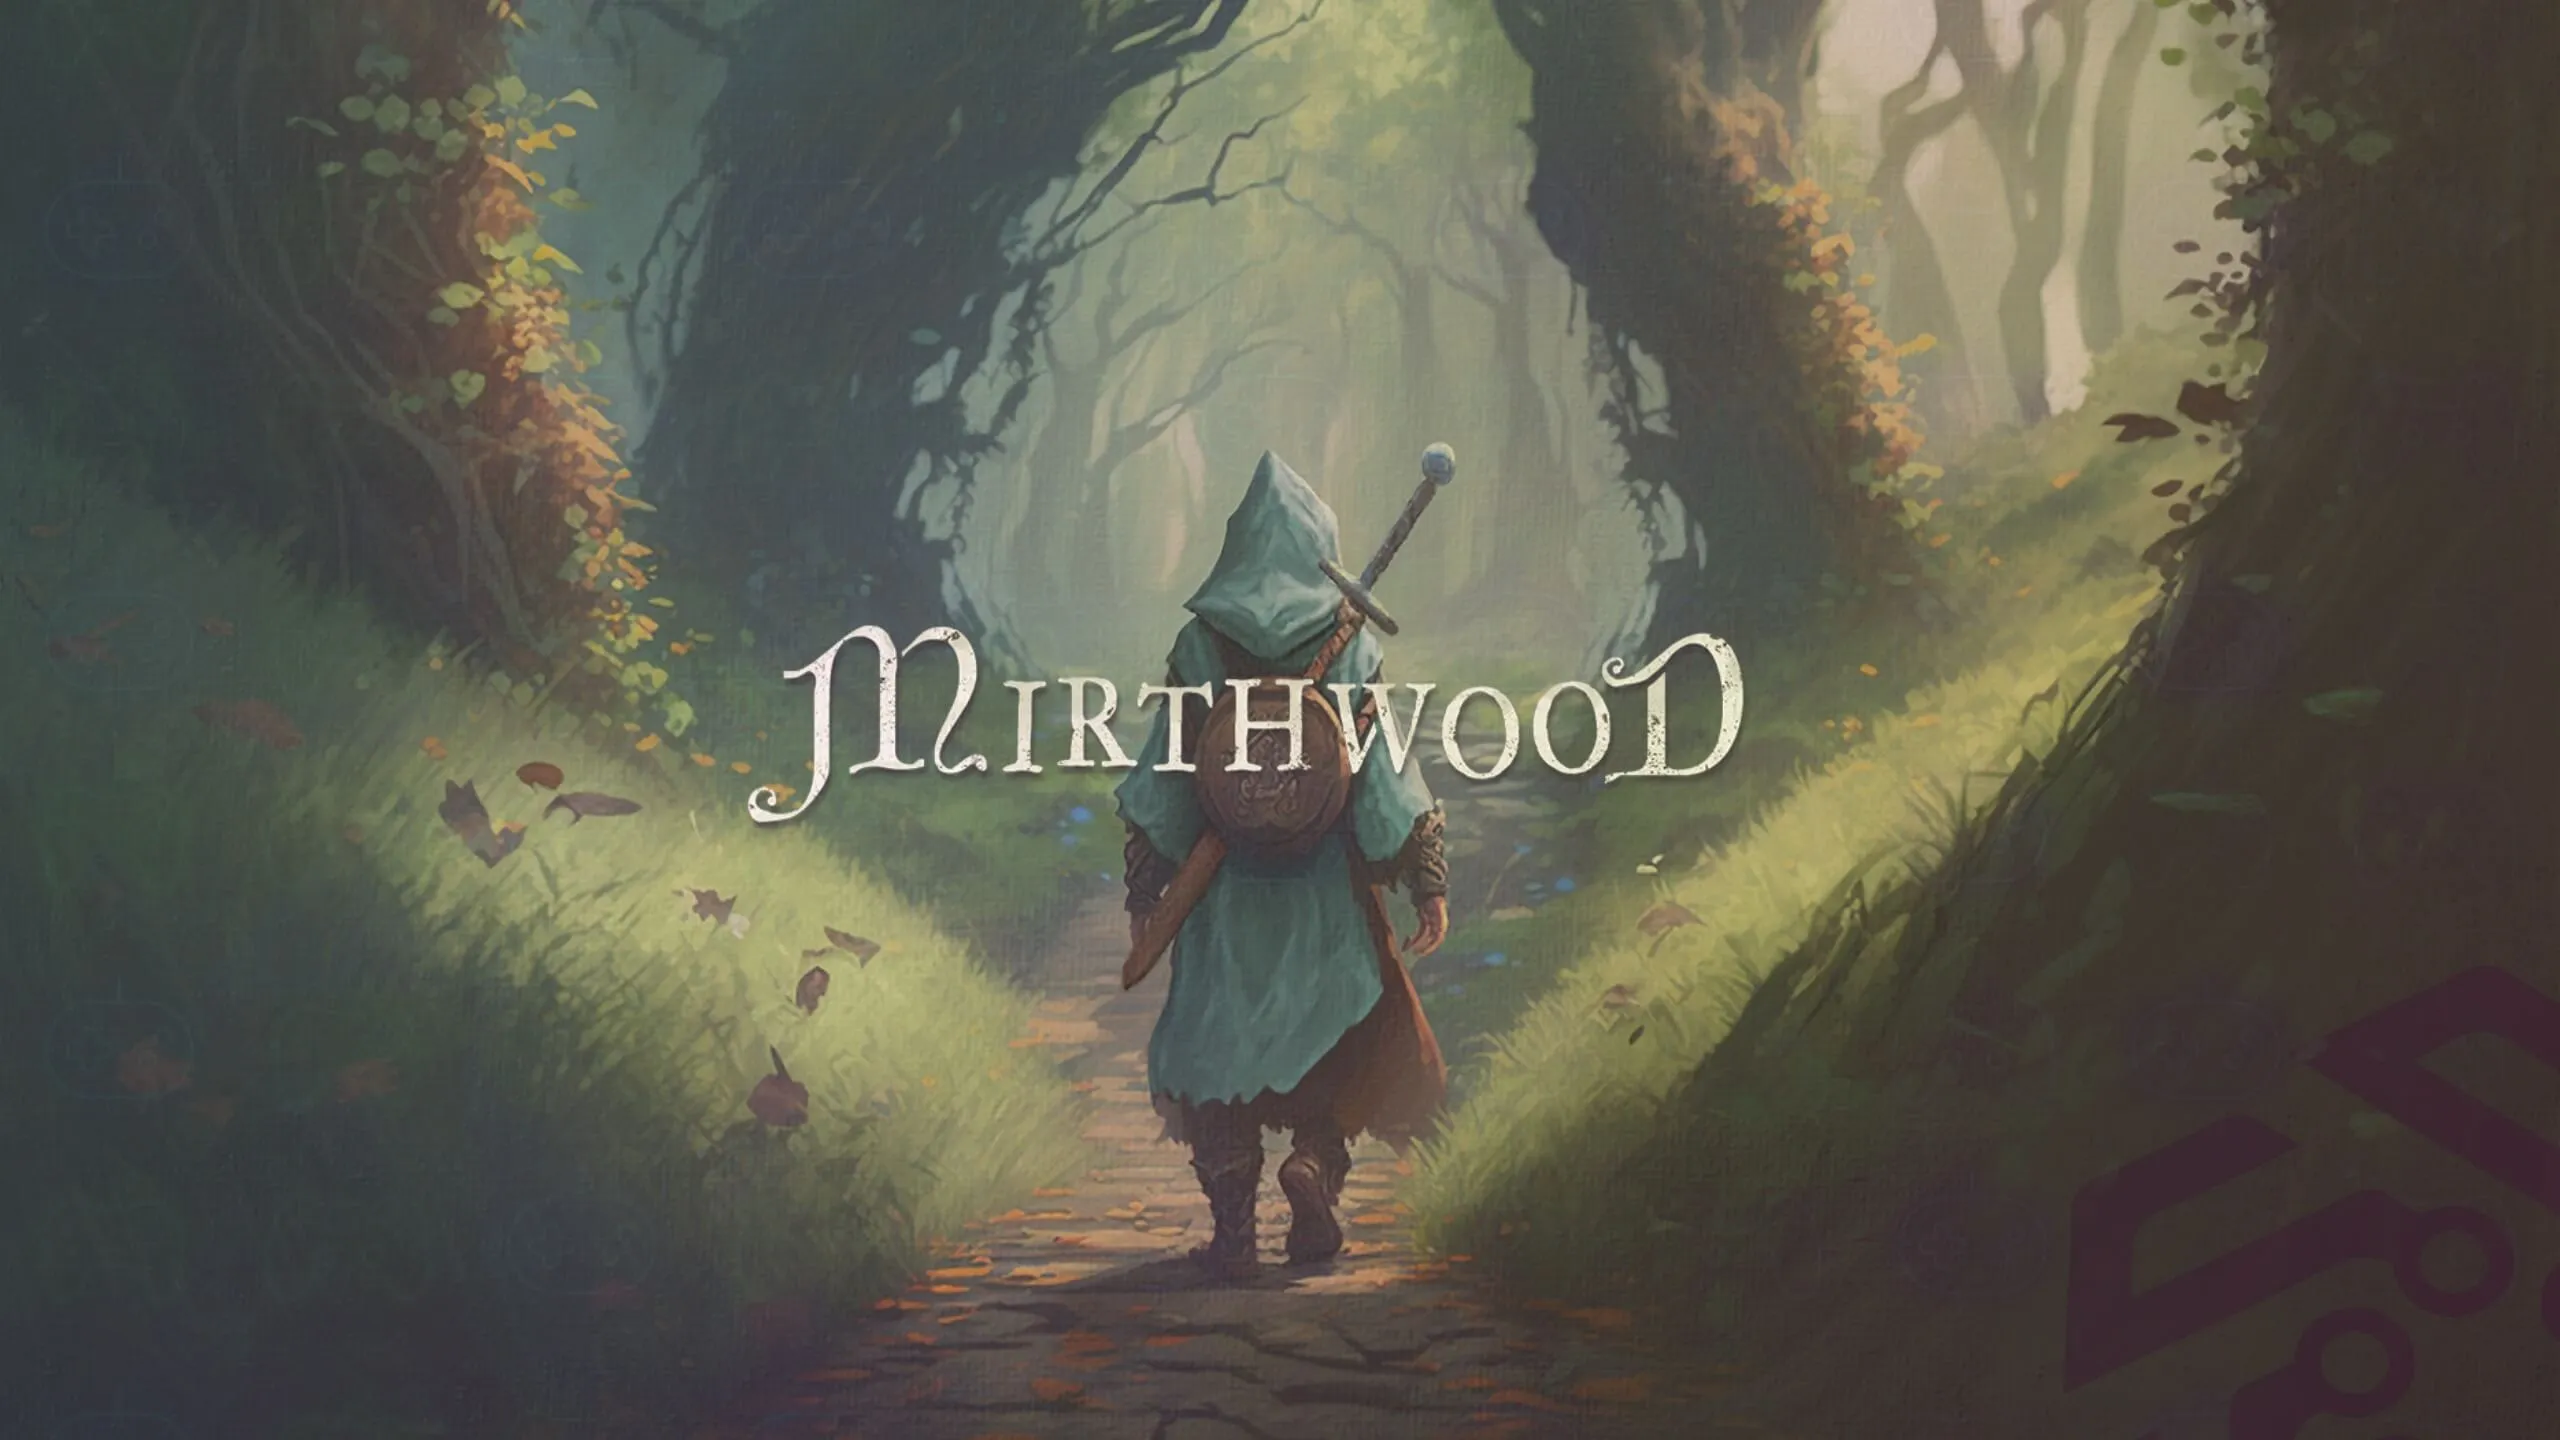 Mirthwood game teaser with logo